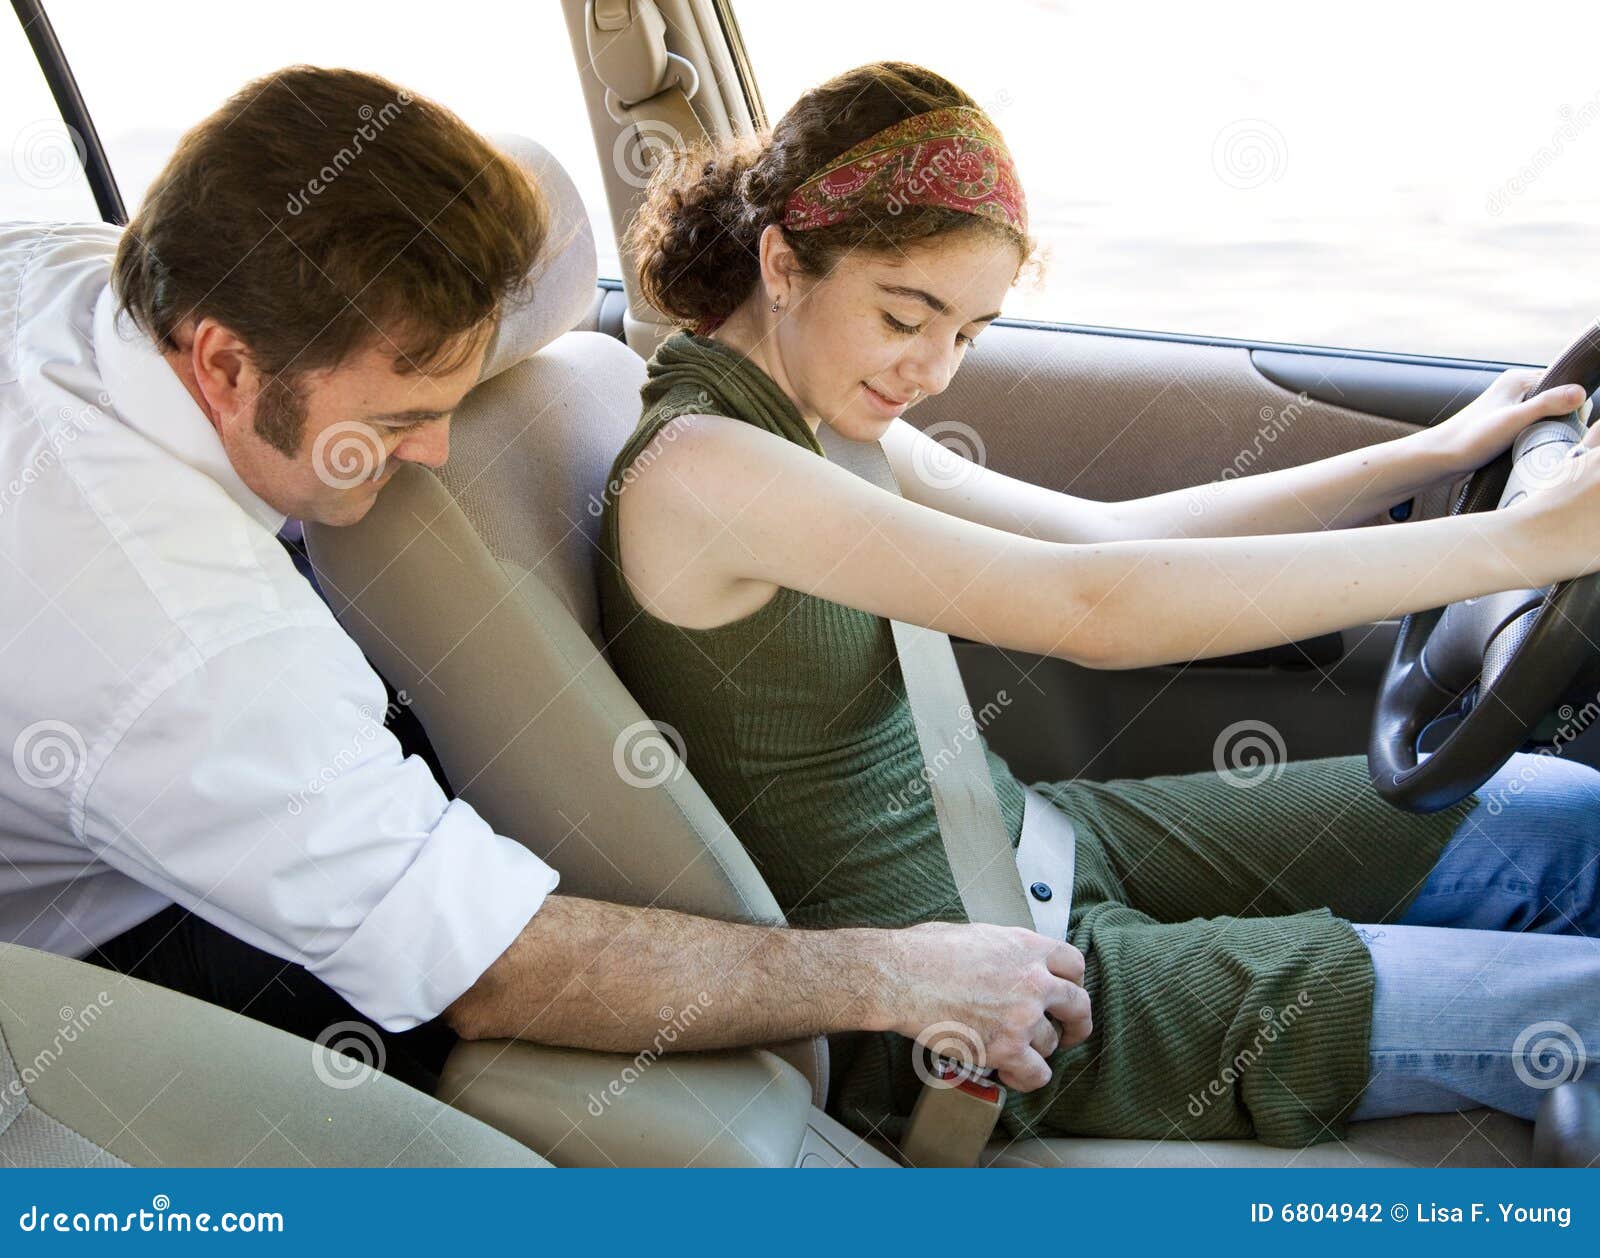 teen driver - fasten your seatbelt